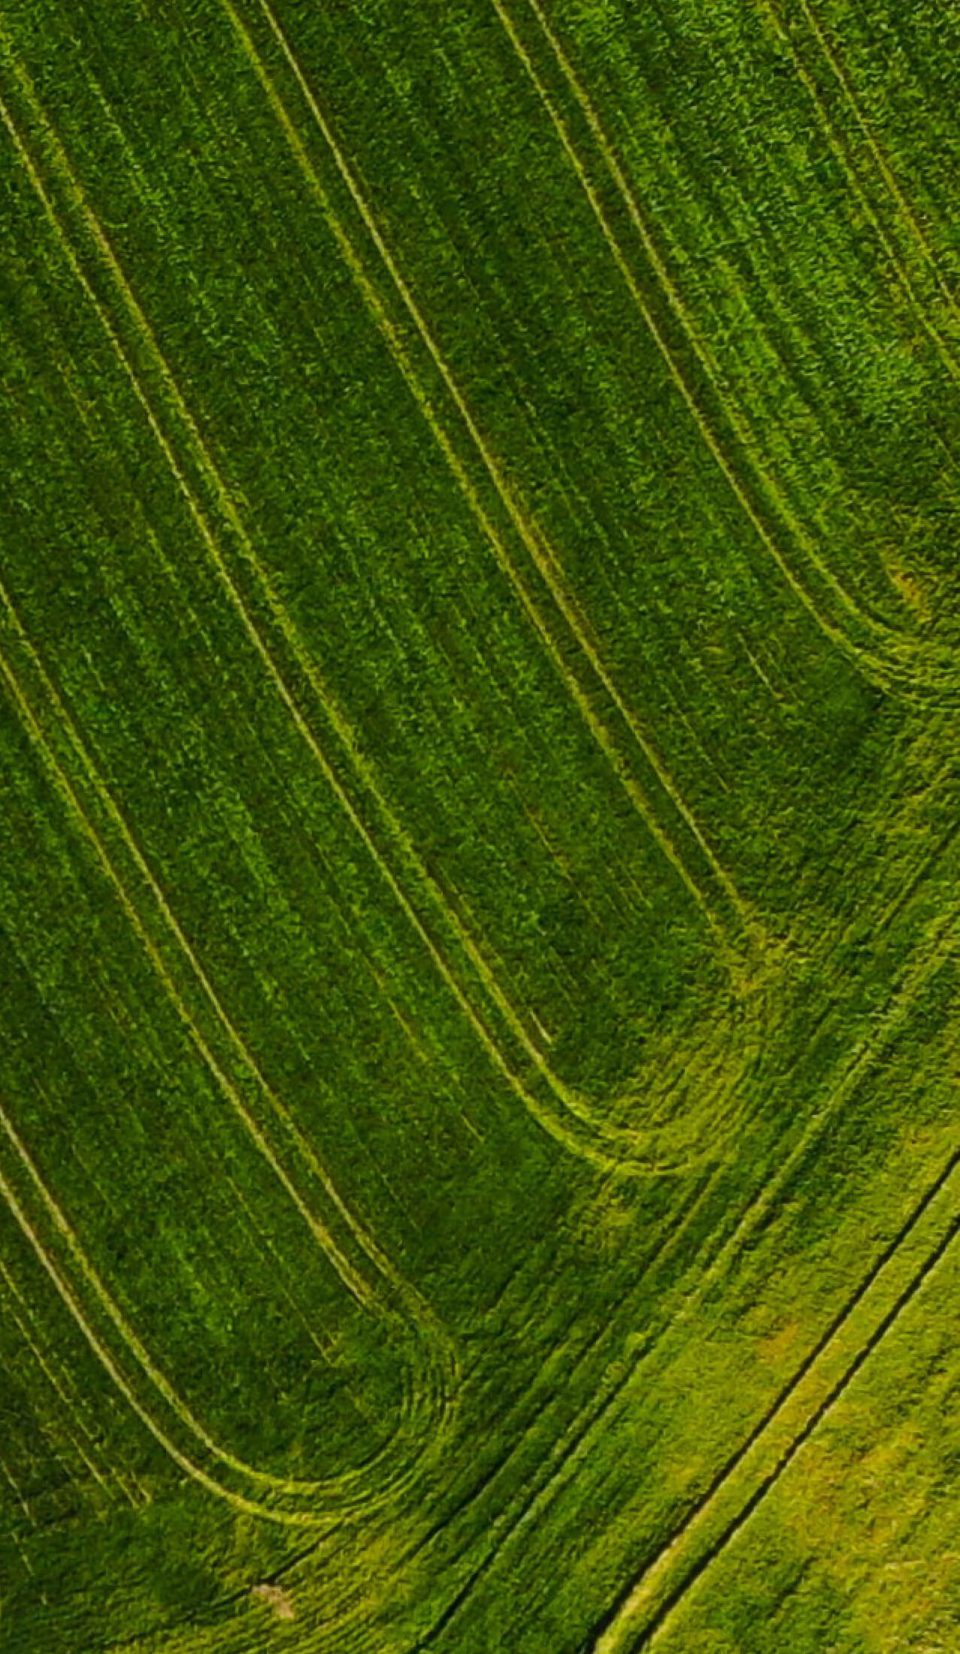 GMO Field - The basics of marketing GMOs